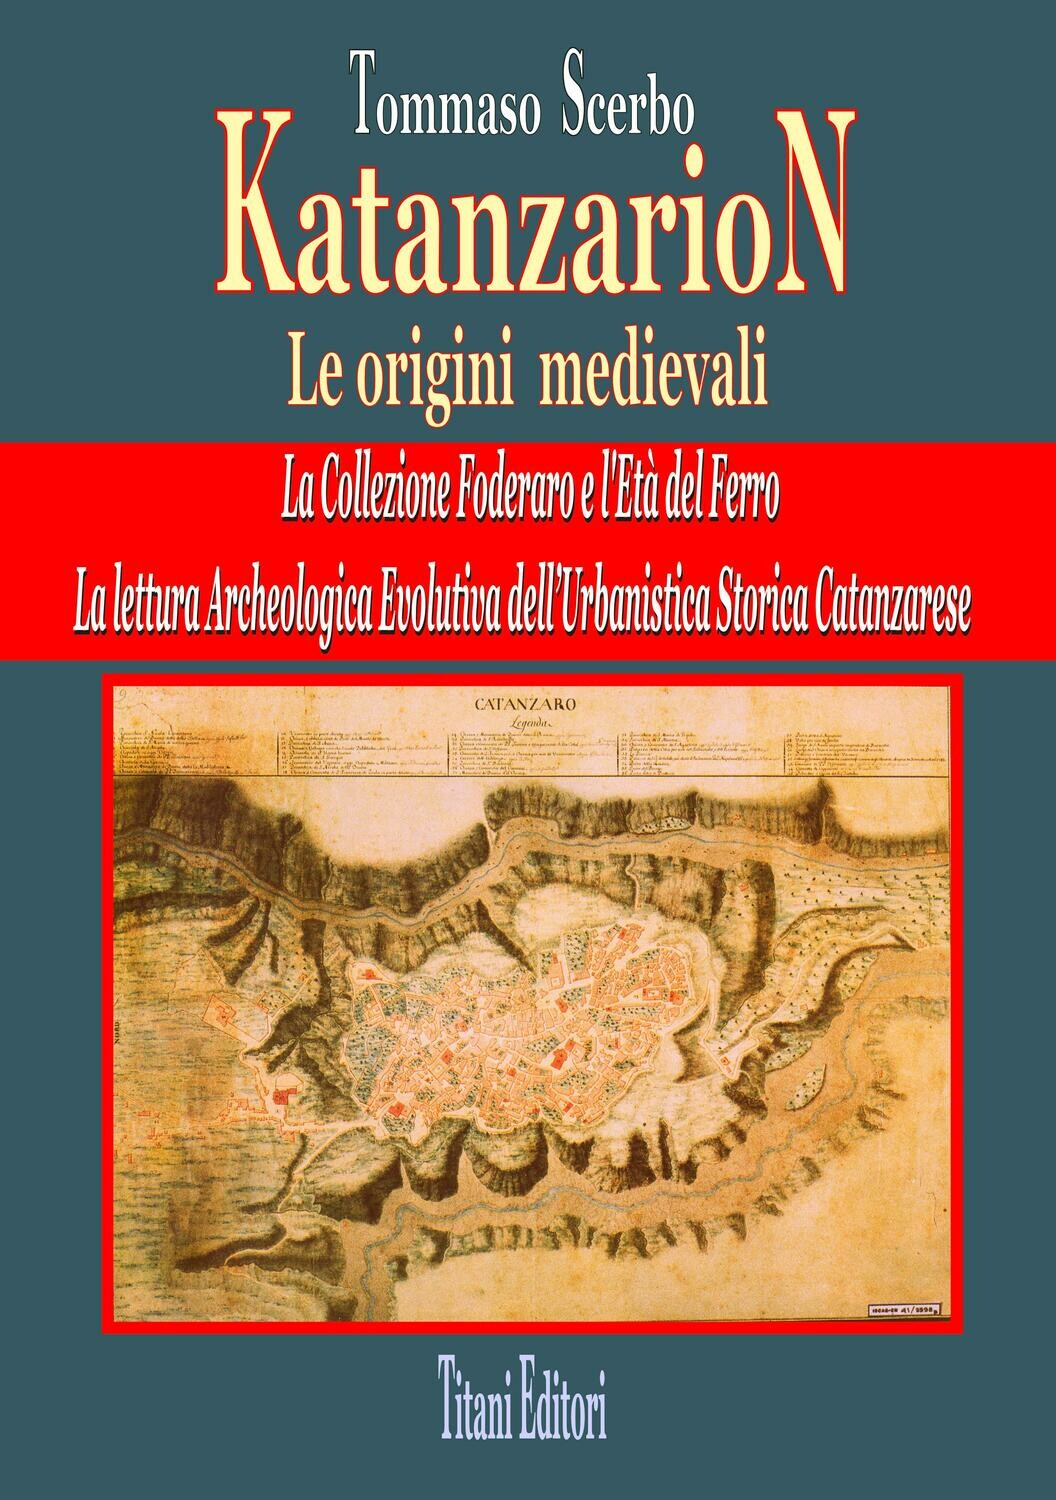 KATANZARION - Le origini medievali - TOMMASO SCERBO